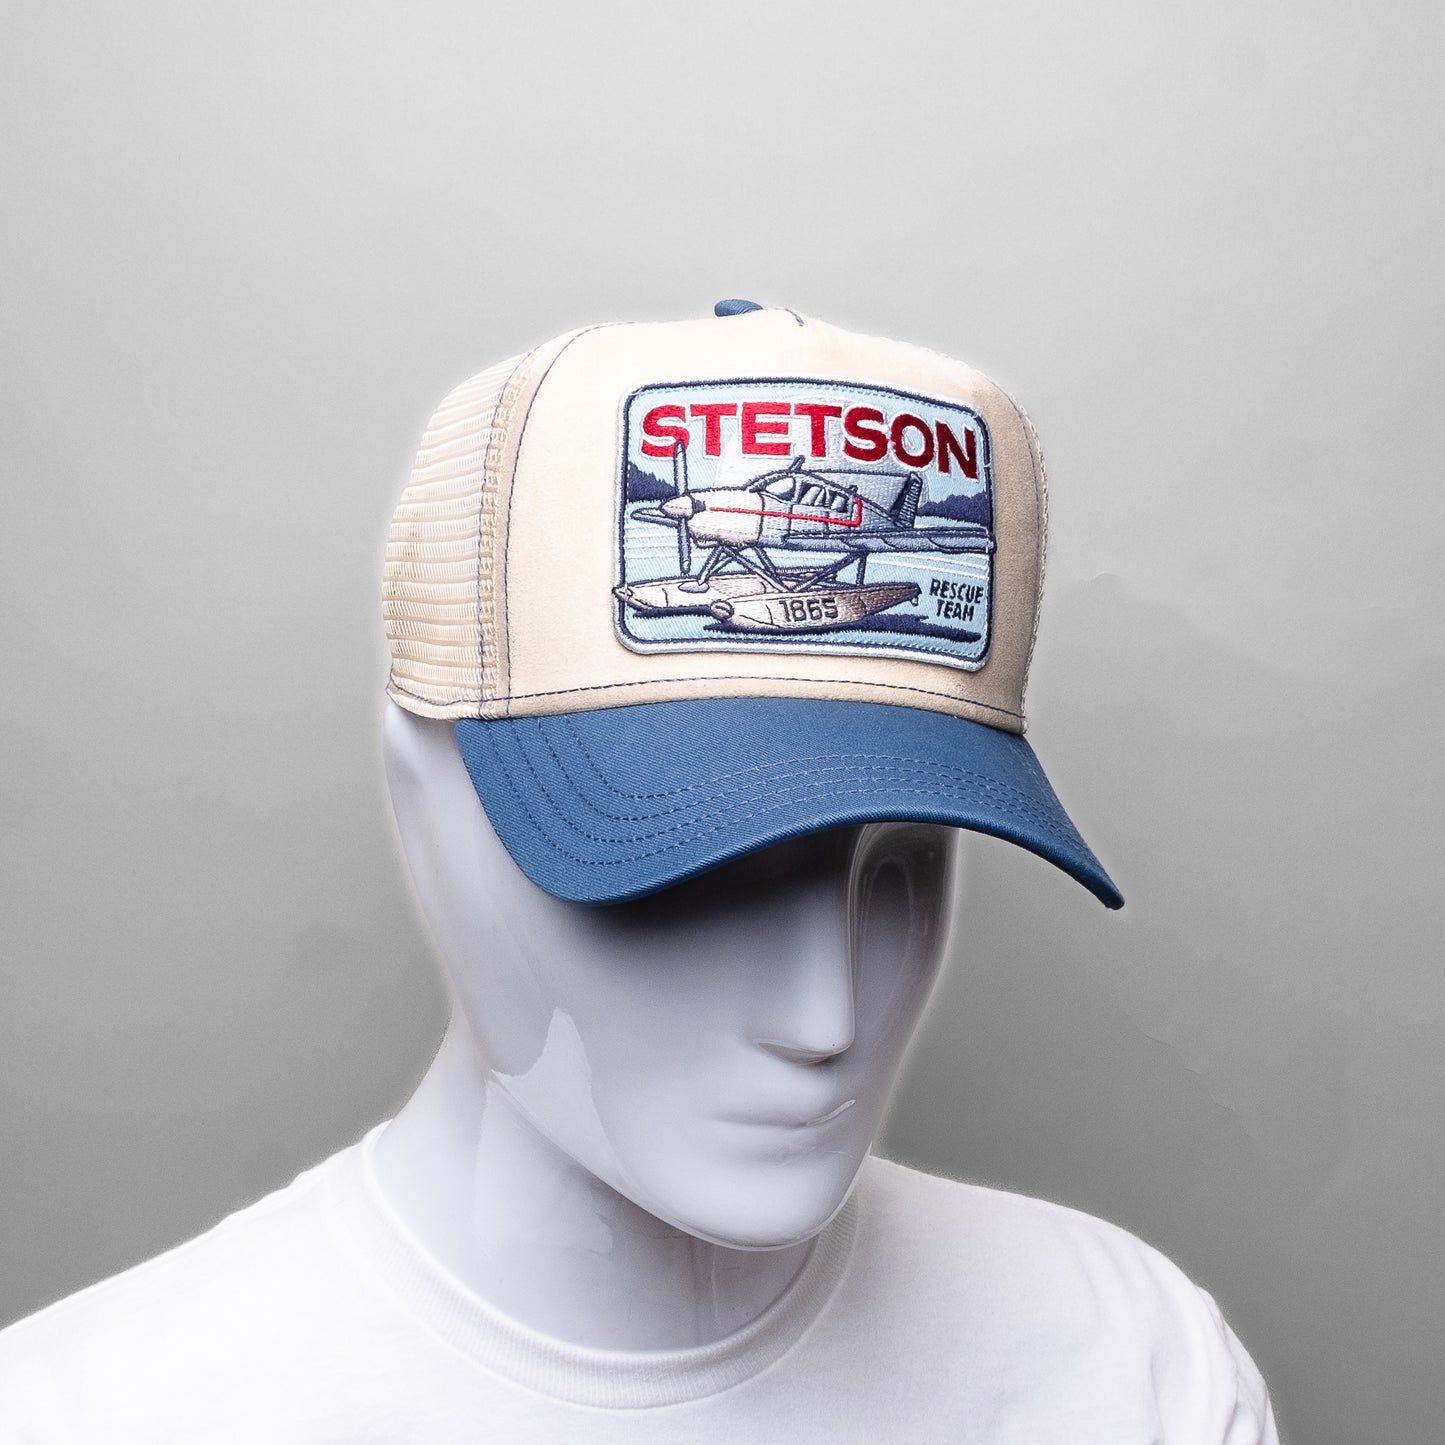 STETSON - RESCUE TEAM TRUCKER CAP